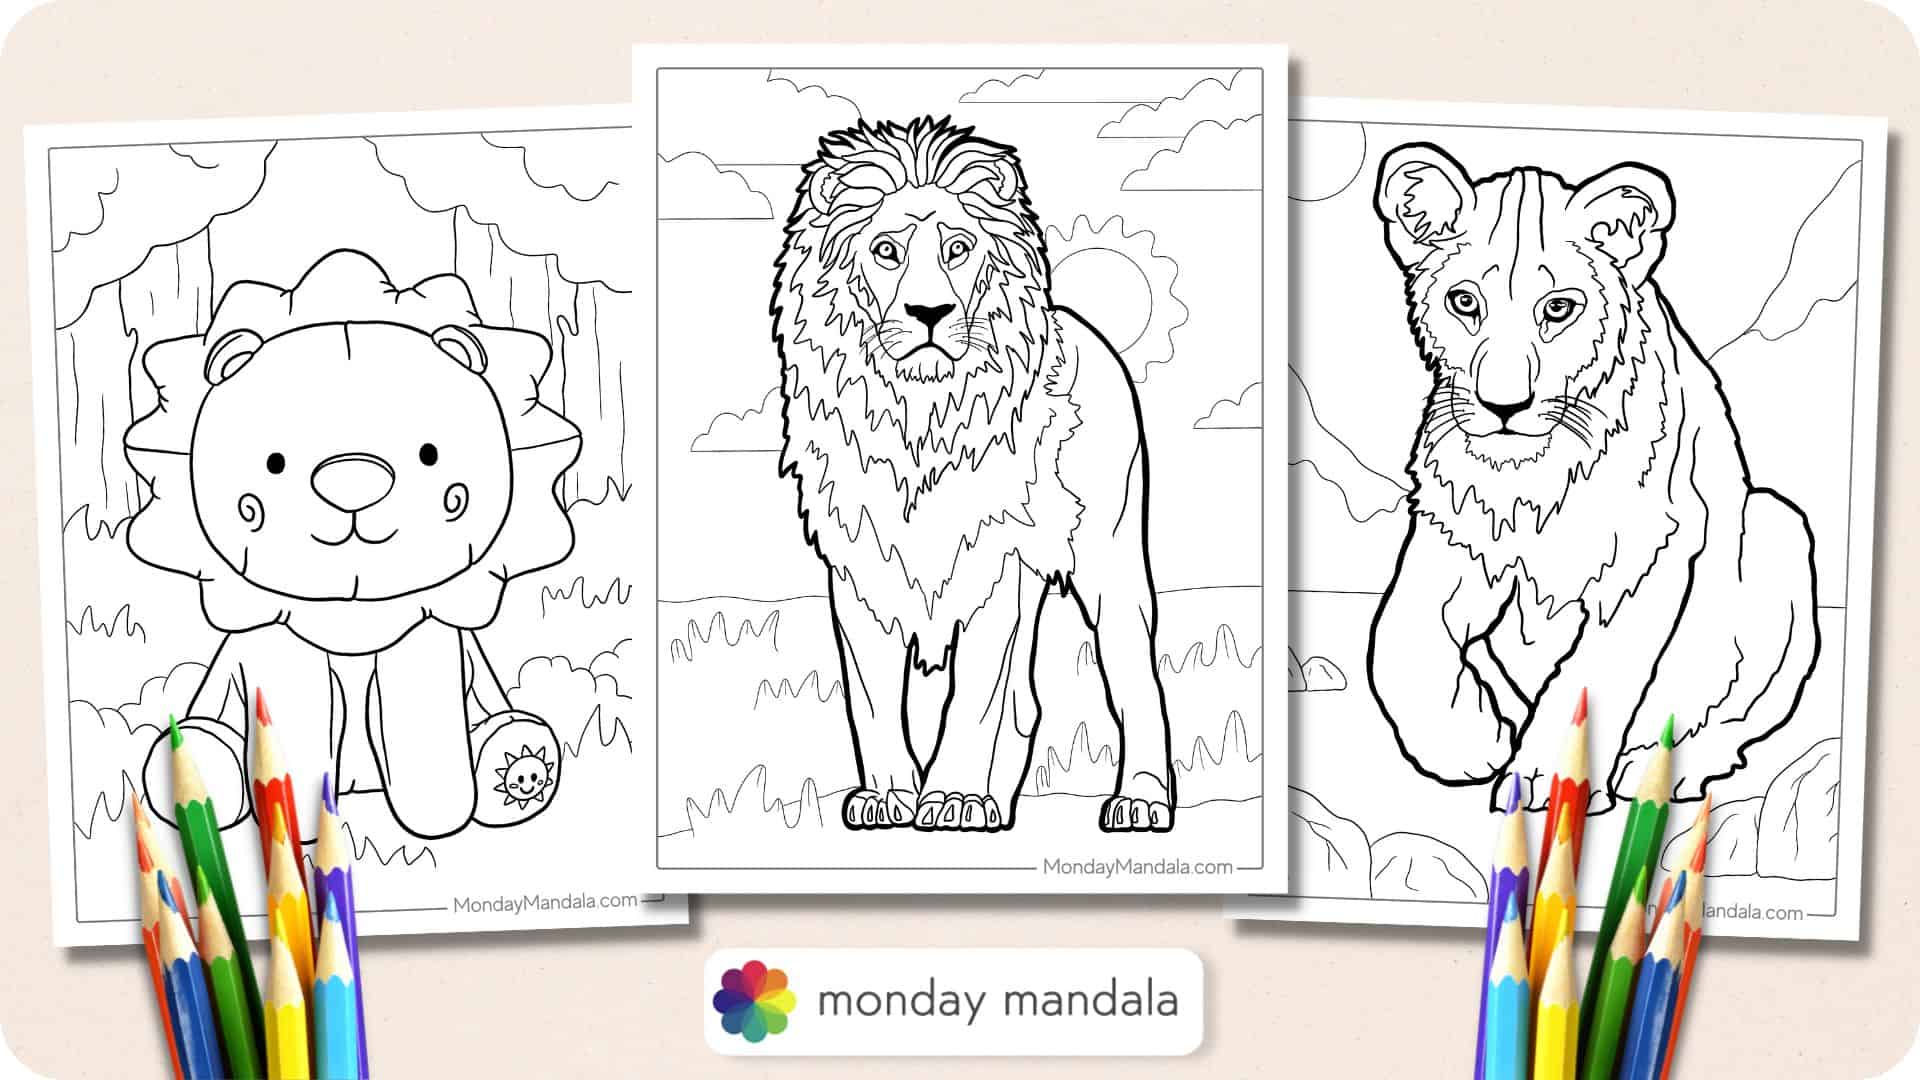 Lion coloring pages free pdf printables